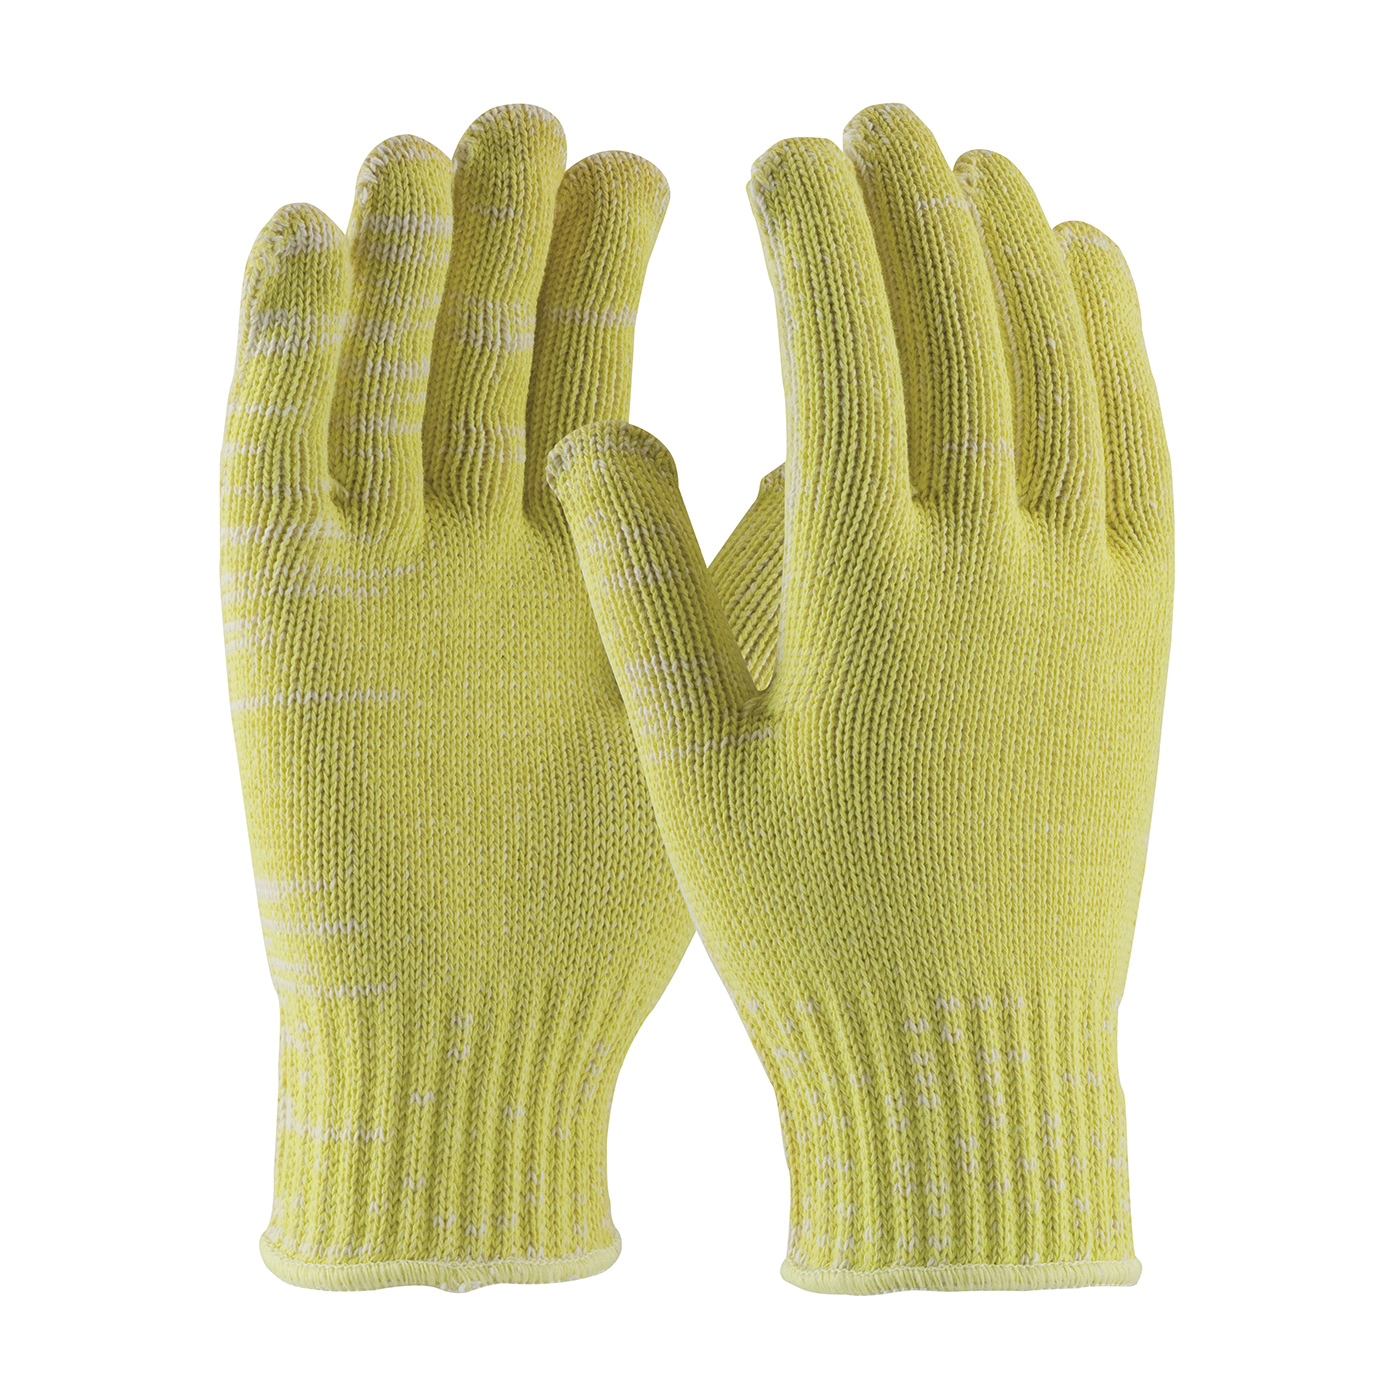 PIP® Kut-Gard® 07-K200/L Lightweight Unisex Cut Resistant Gloves, L, Uncoated Coating, DuPont™ Kevlar® Fiber, Elastic/Knit Wrist Cuff, Resists: Cut, Heat and Flame, ANSI Cut-Resistance Level: A2